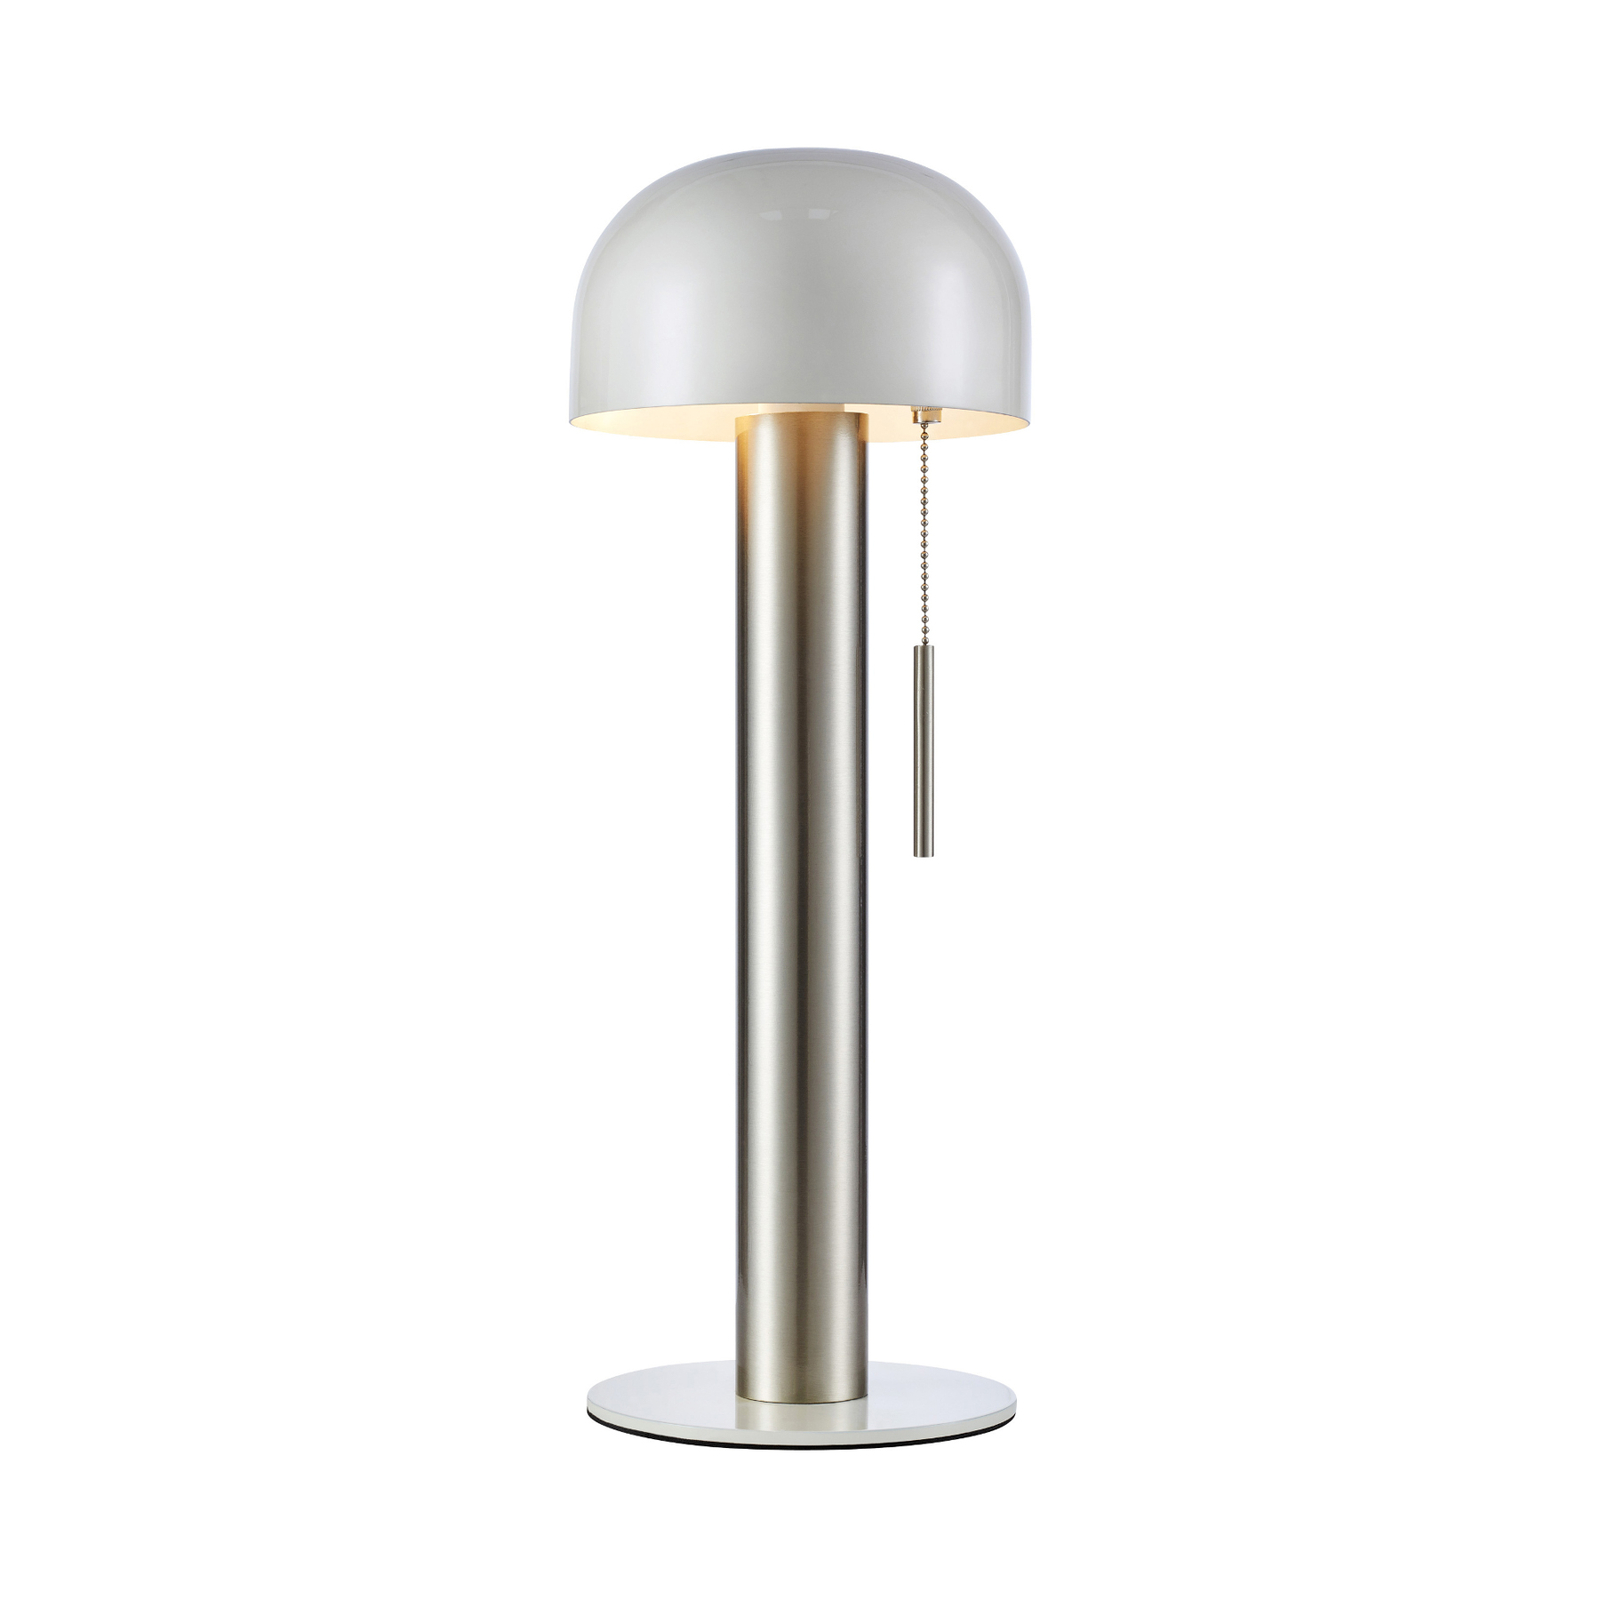 Costa bordslampa i metall, vit/nickel